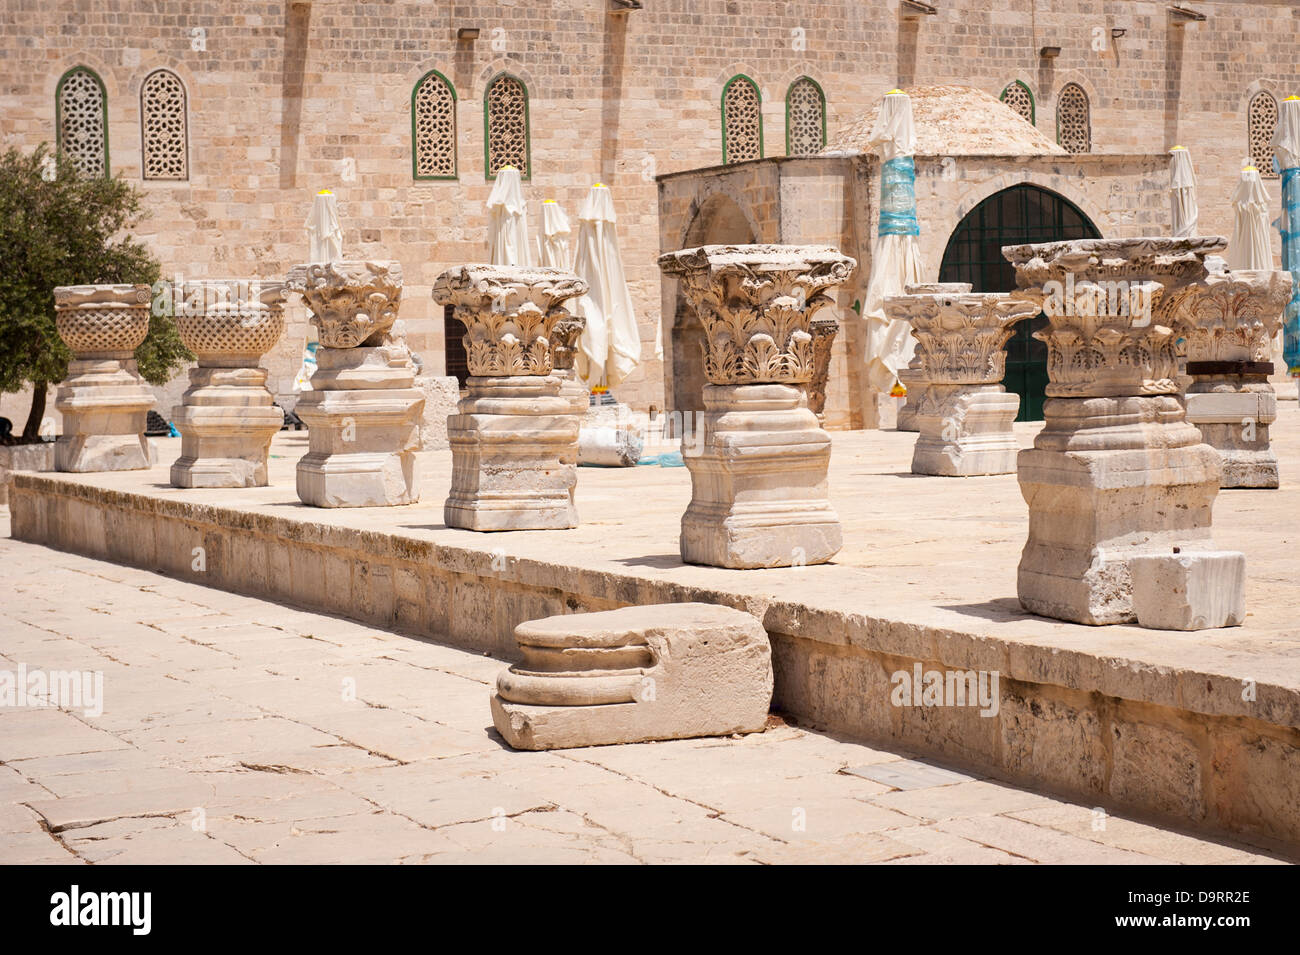 Israele città vecchia Gerusalemme Haram Esh Sharif nobile Santuario Temple Mount Cupola della Roccia El Aqsa moschea museo islamico Foto Stock